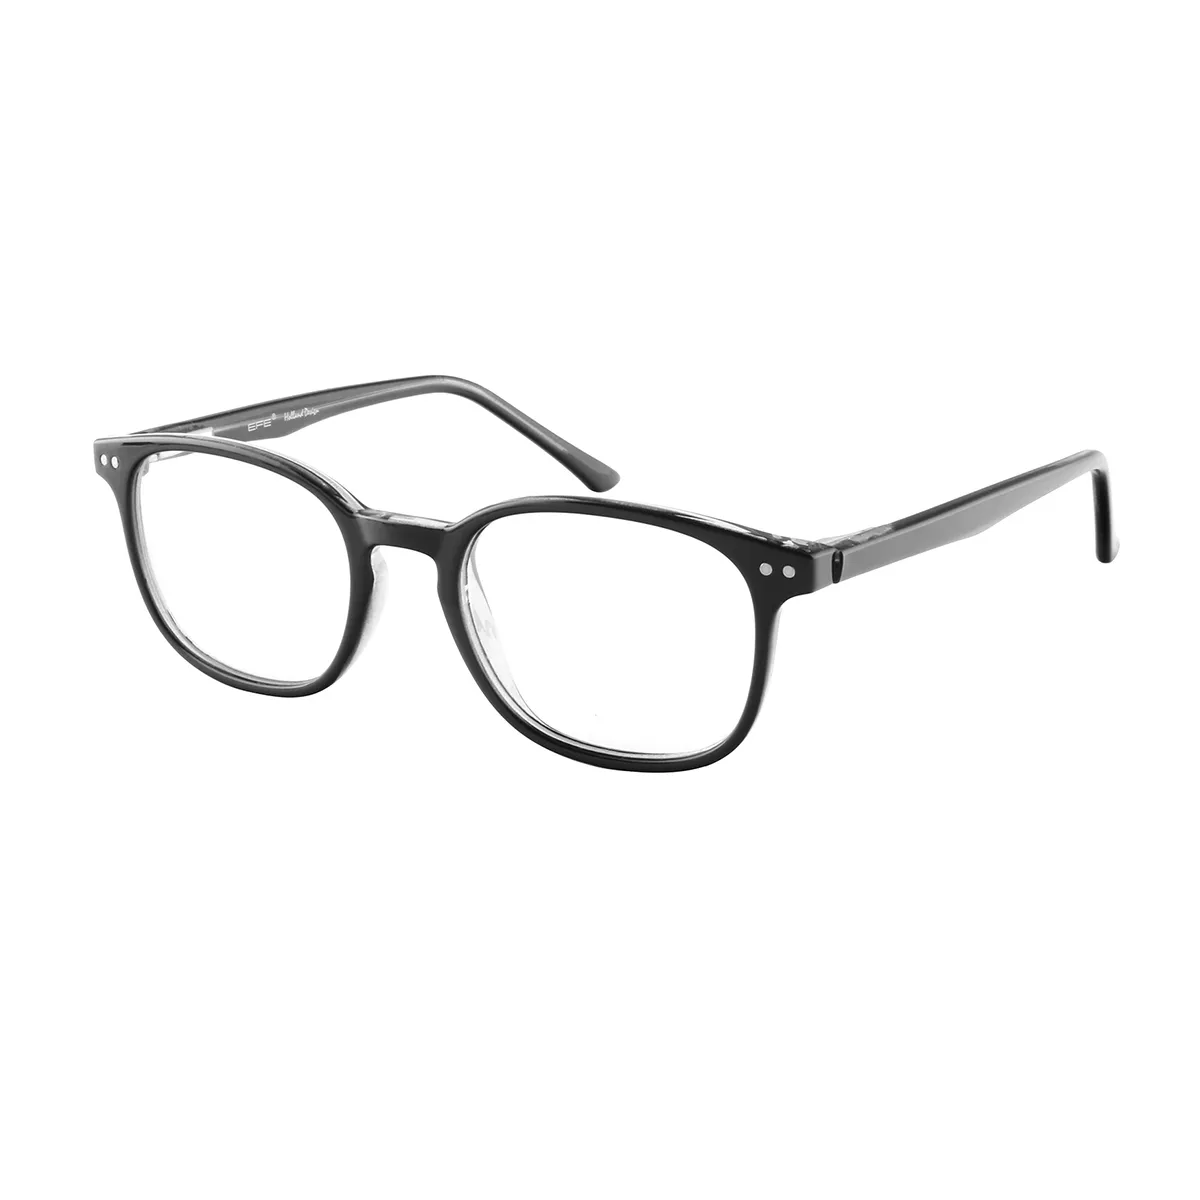 Sanchez - Square Black Glasses for Men & Women - EFE